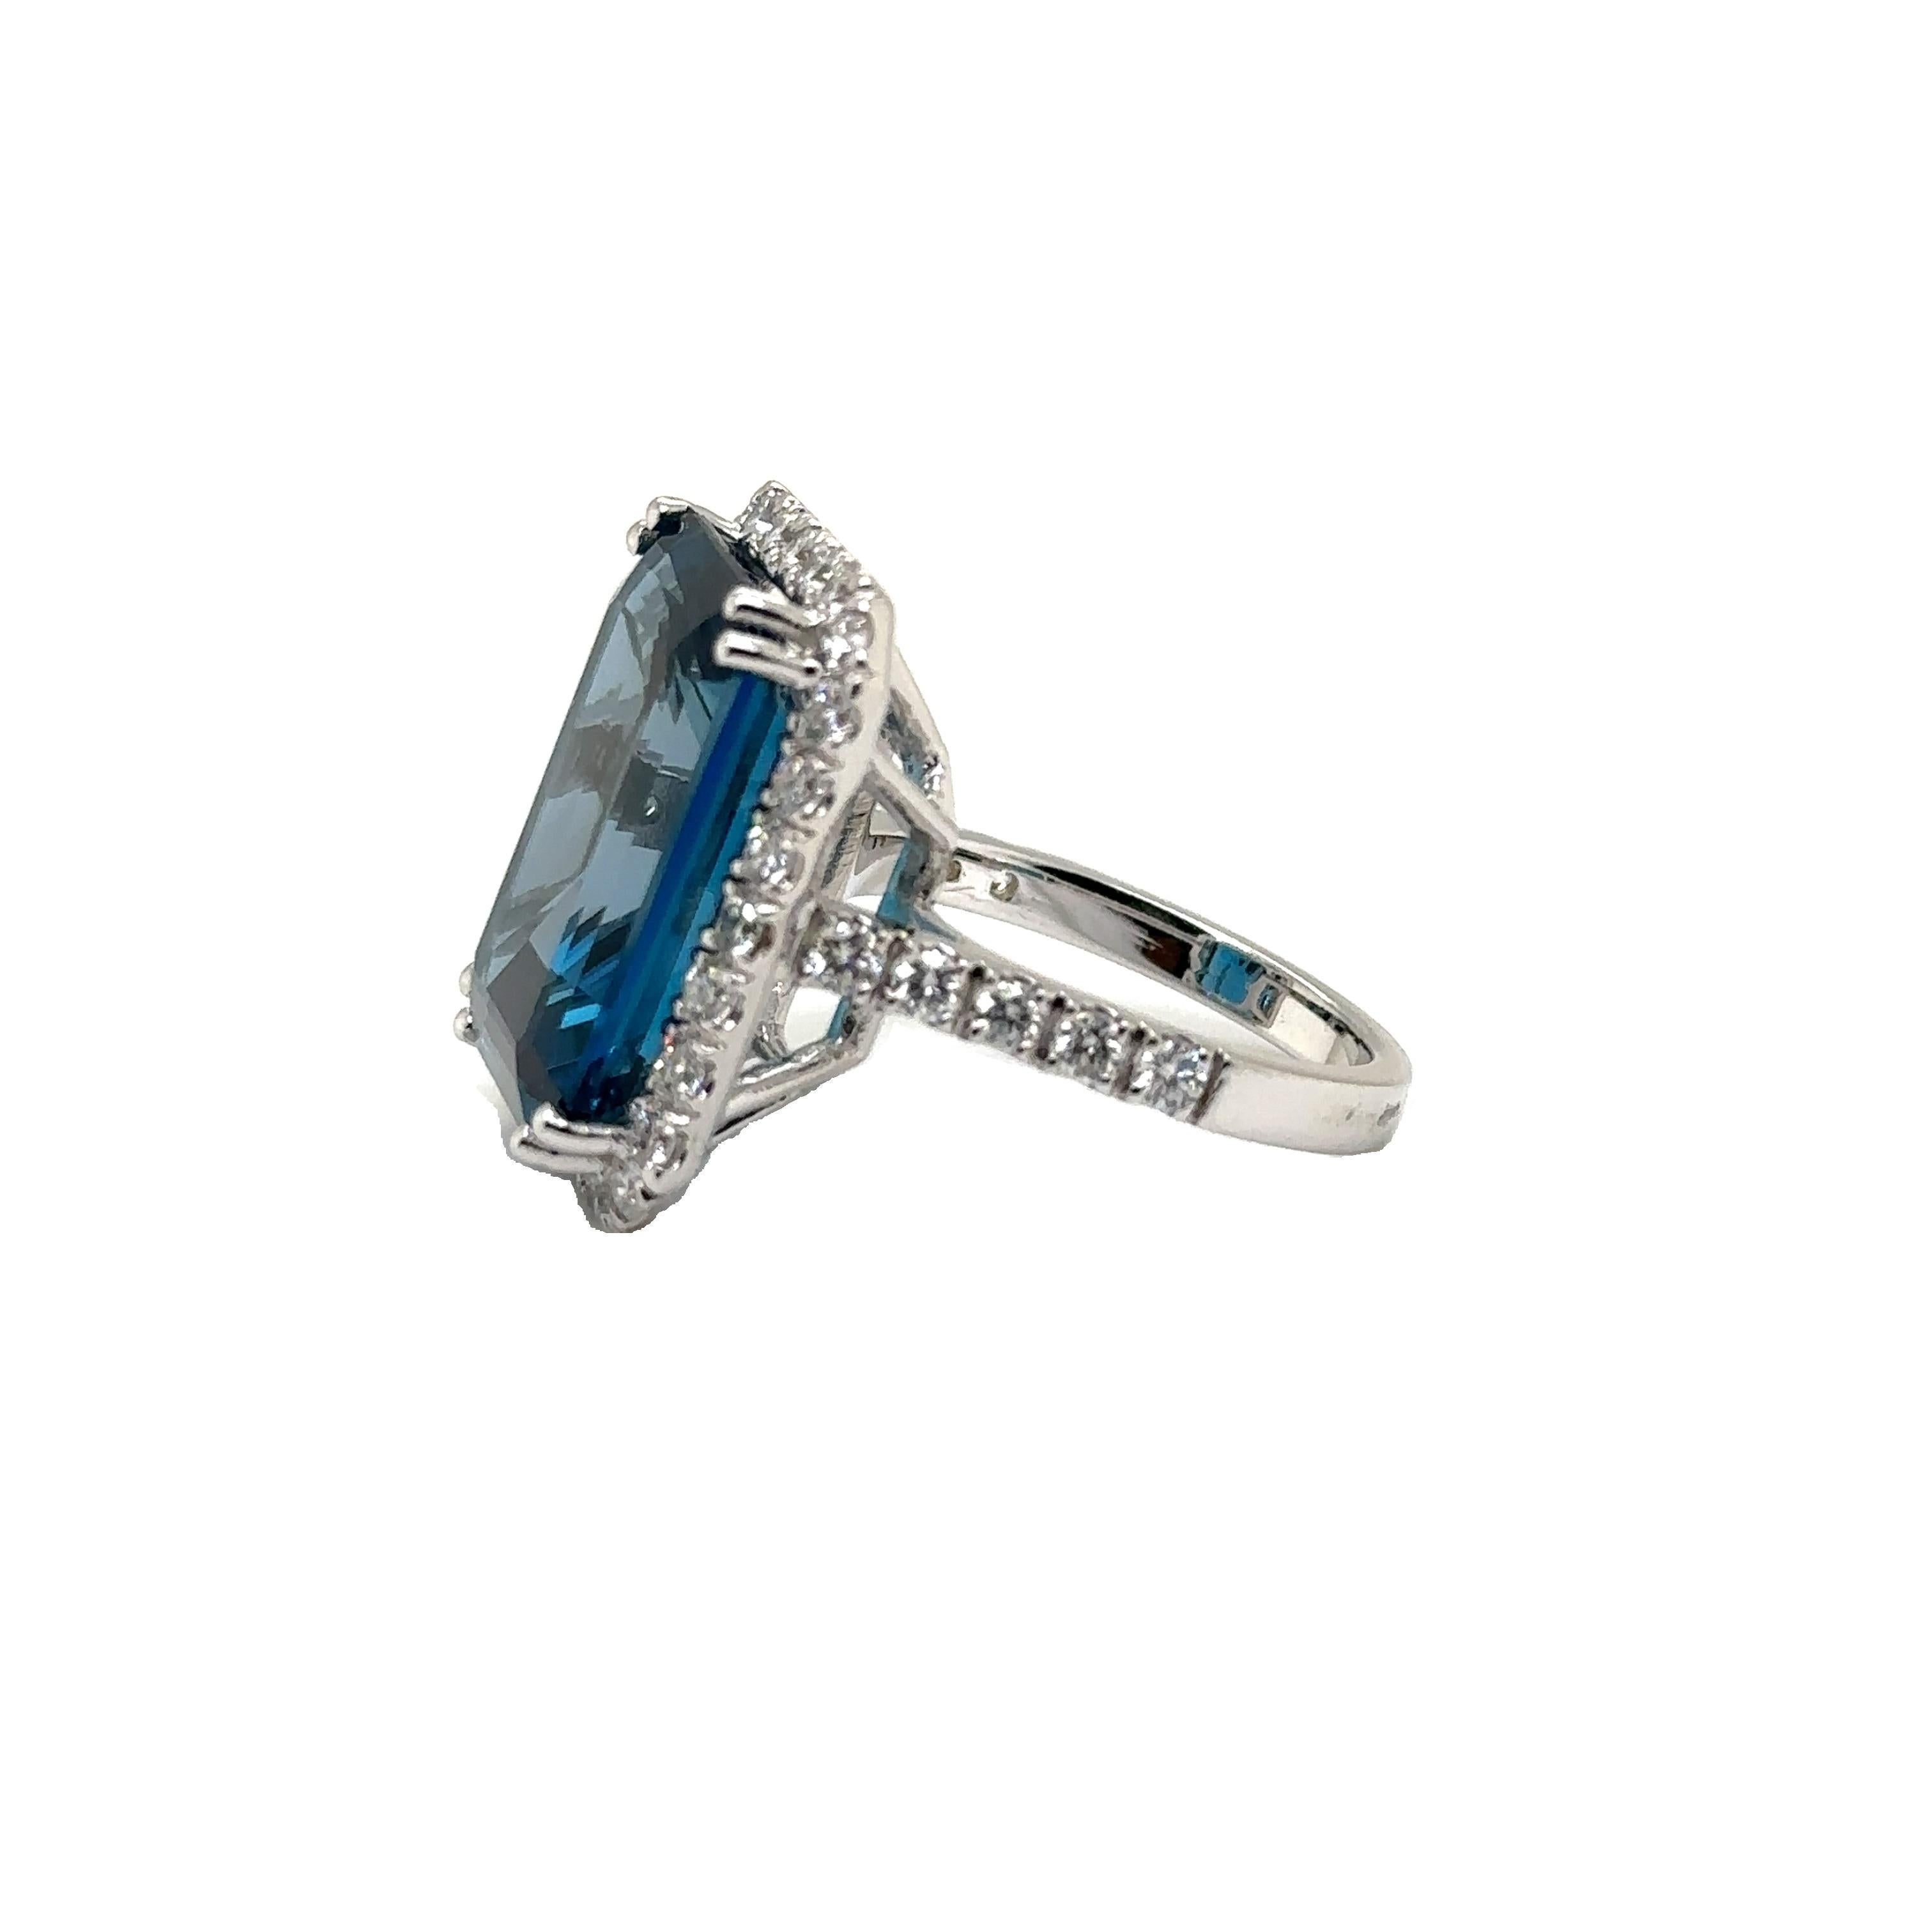 JAS-21-2245 - 14K WG 1.25ct GH-SI1 DIAMONDS & EMERALD CUT LONDON BLUE TOPAZ RING For Sale 2